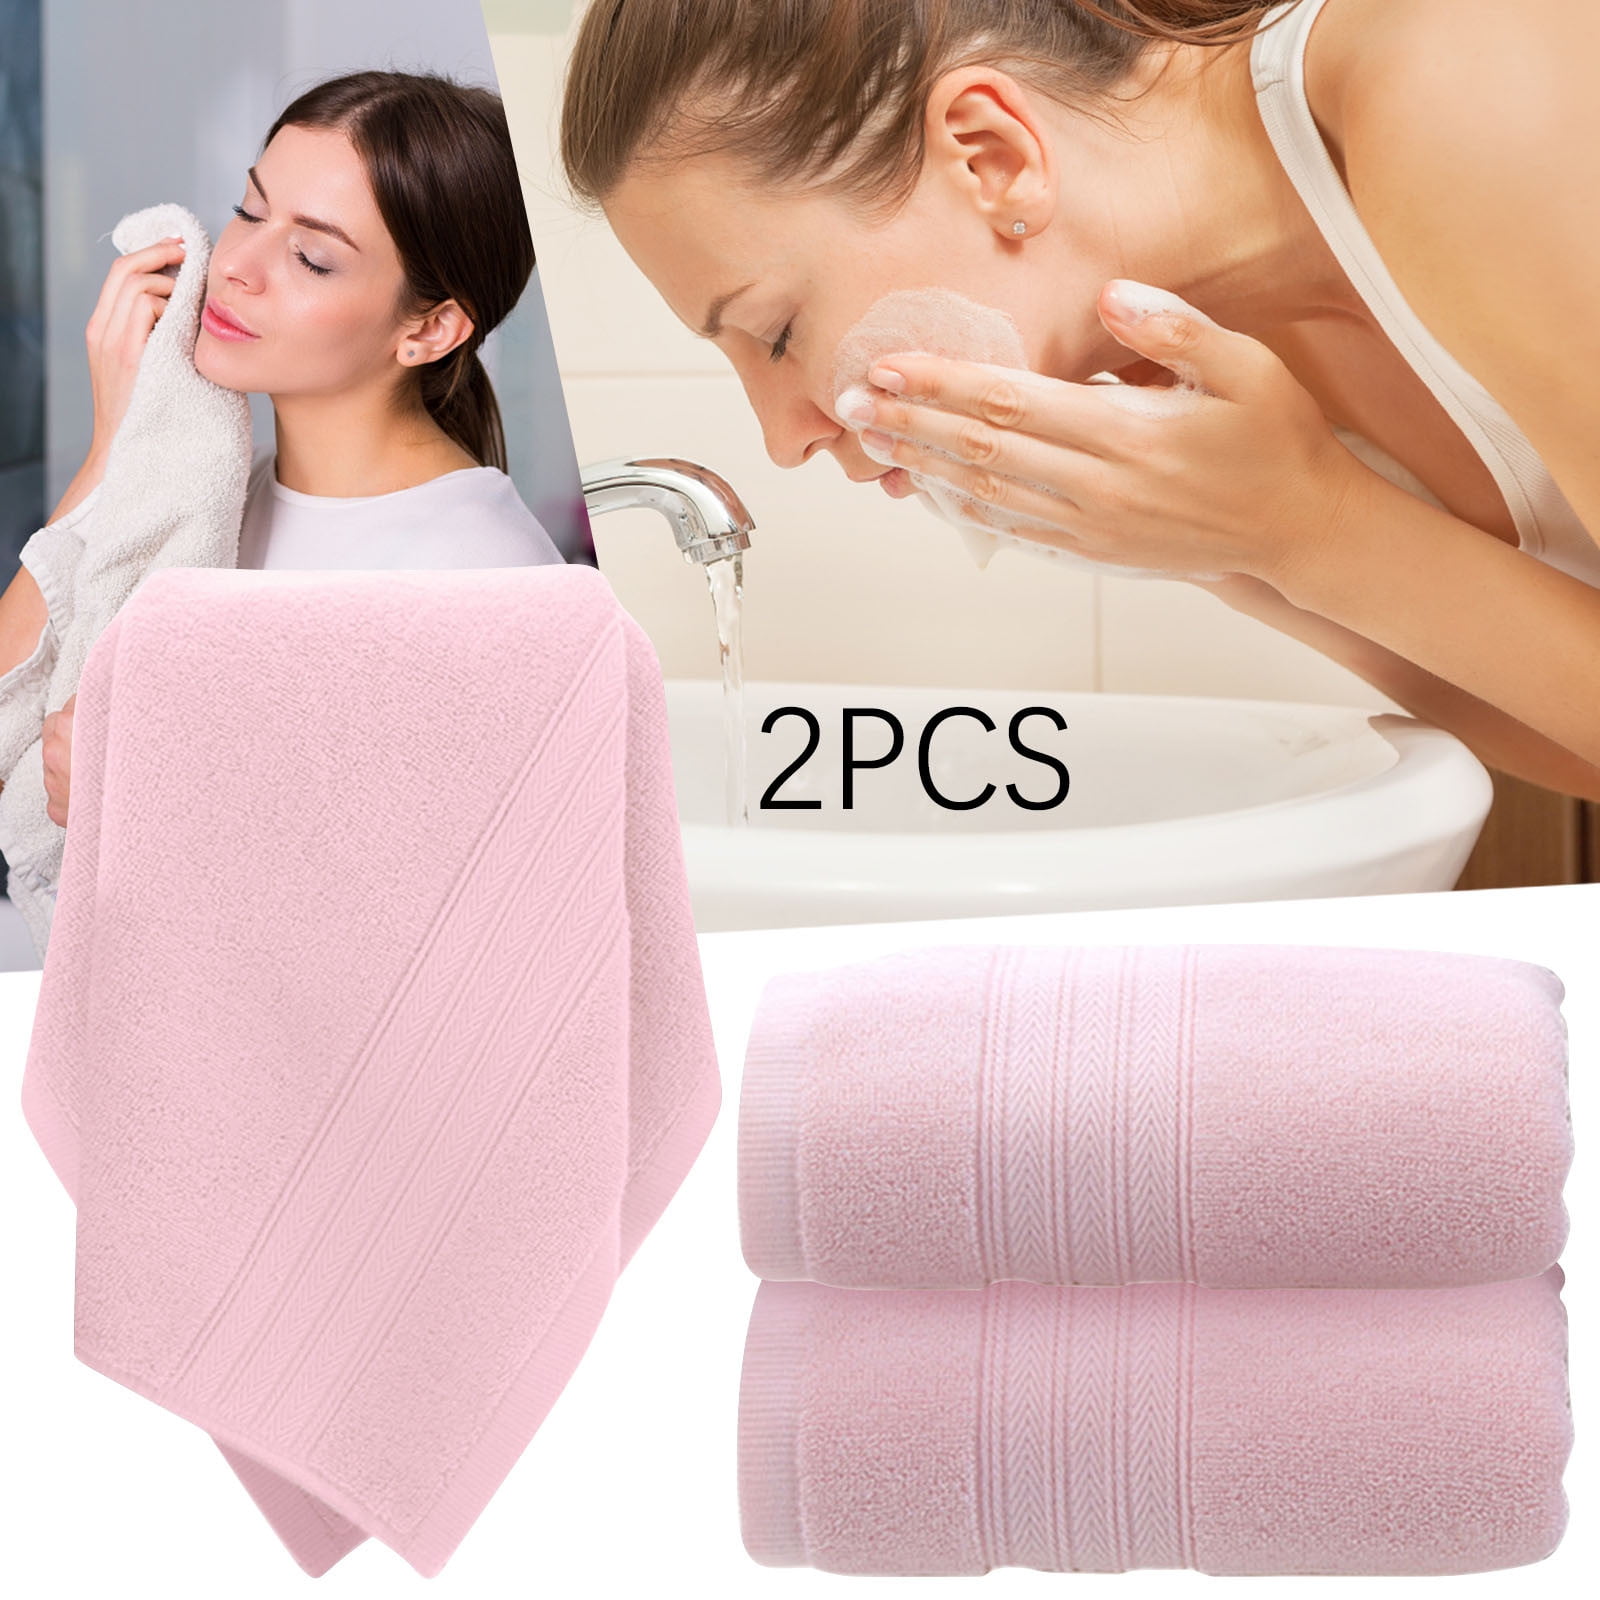 Cotton 2 in 1 Bath Towel and Face Towel Soft-Bath Towels Set of 2pcs